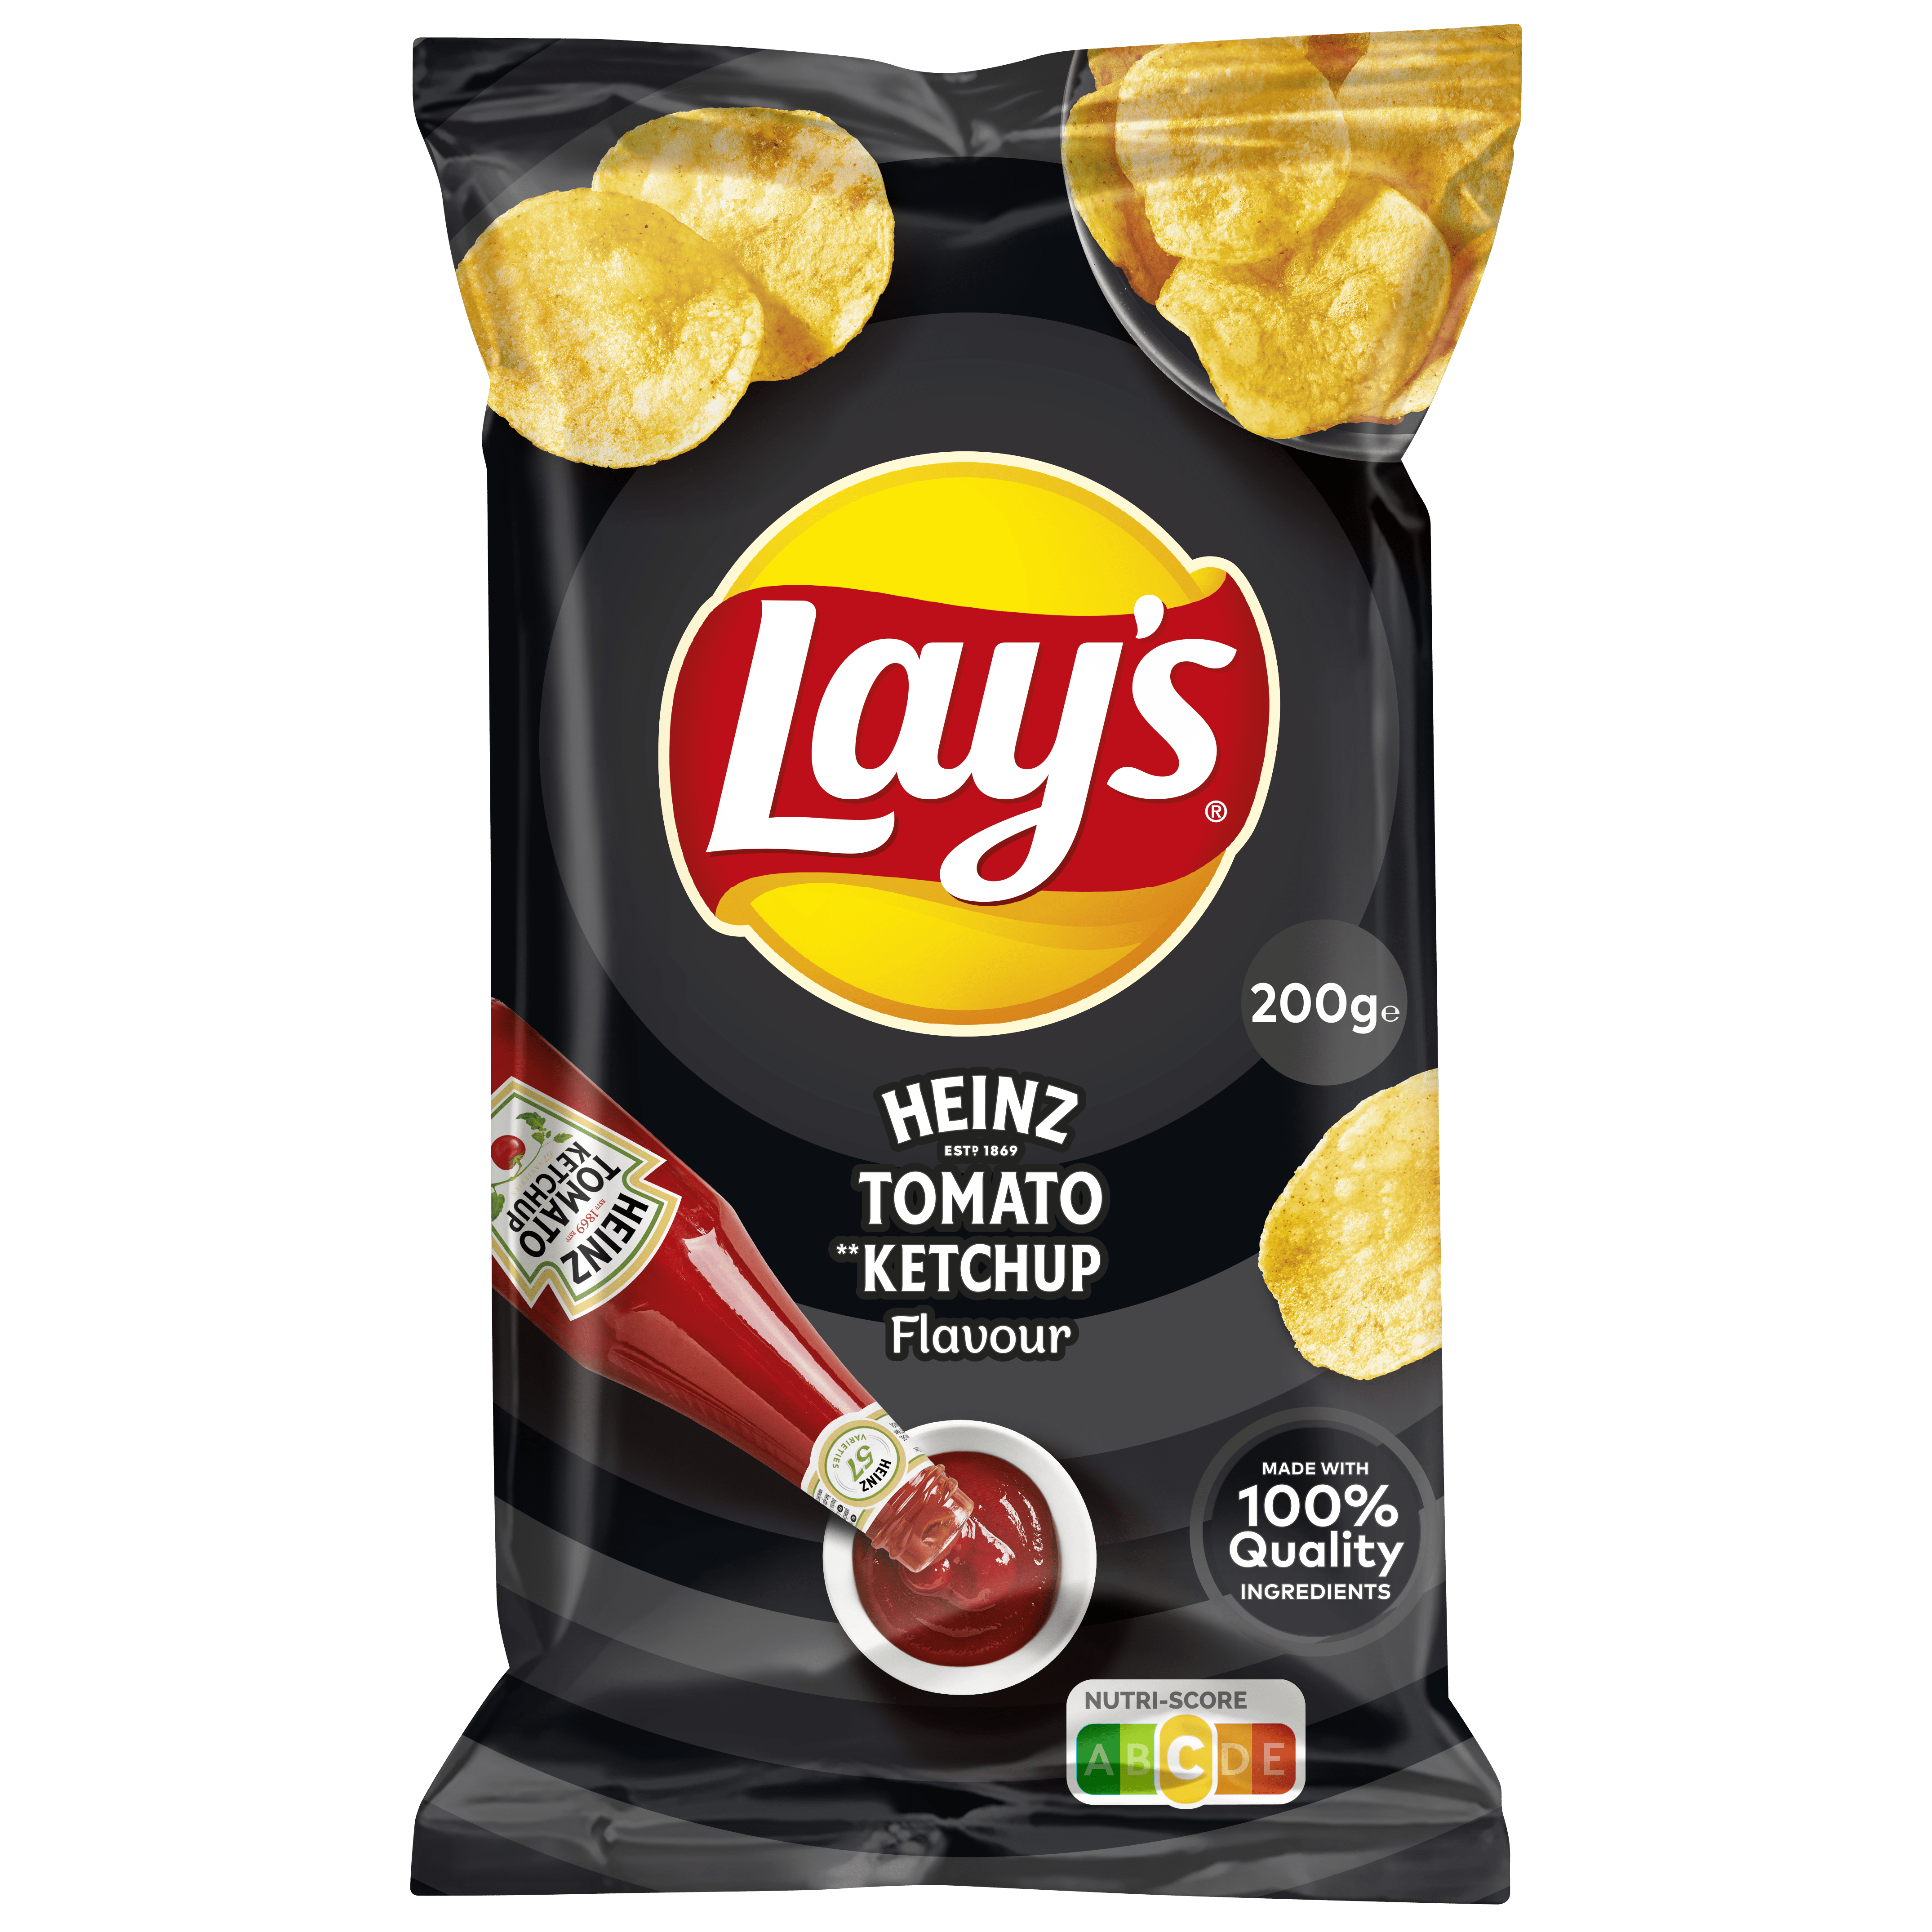 Lay's Heinz® Tomato Ketchup